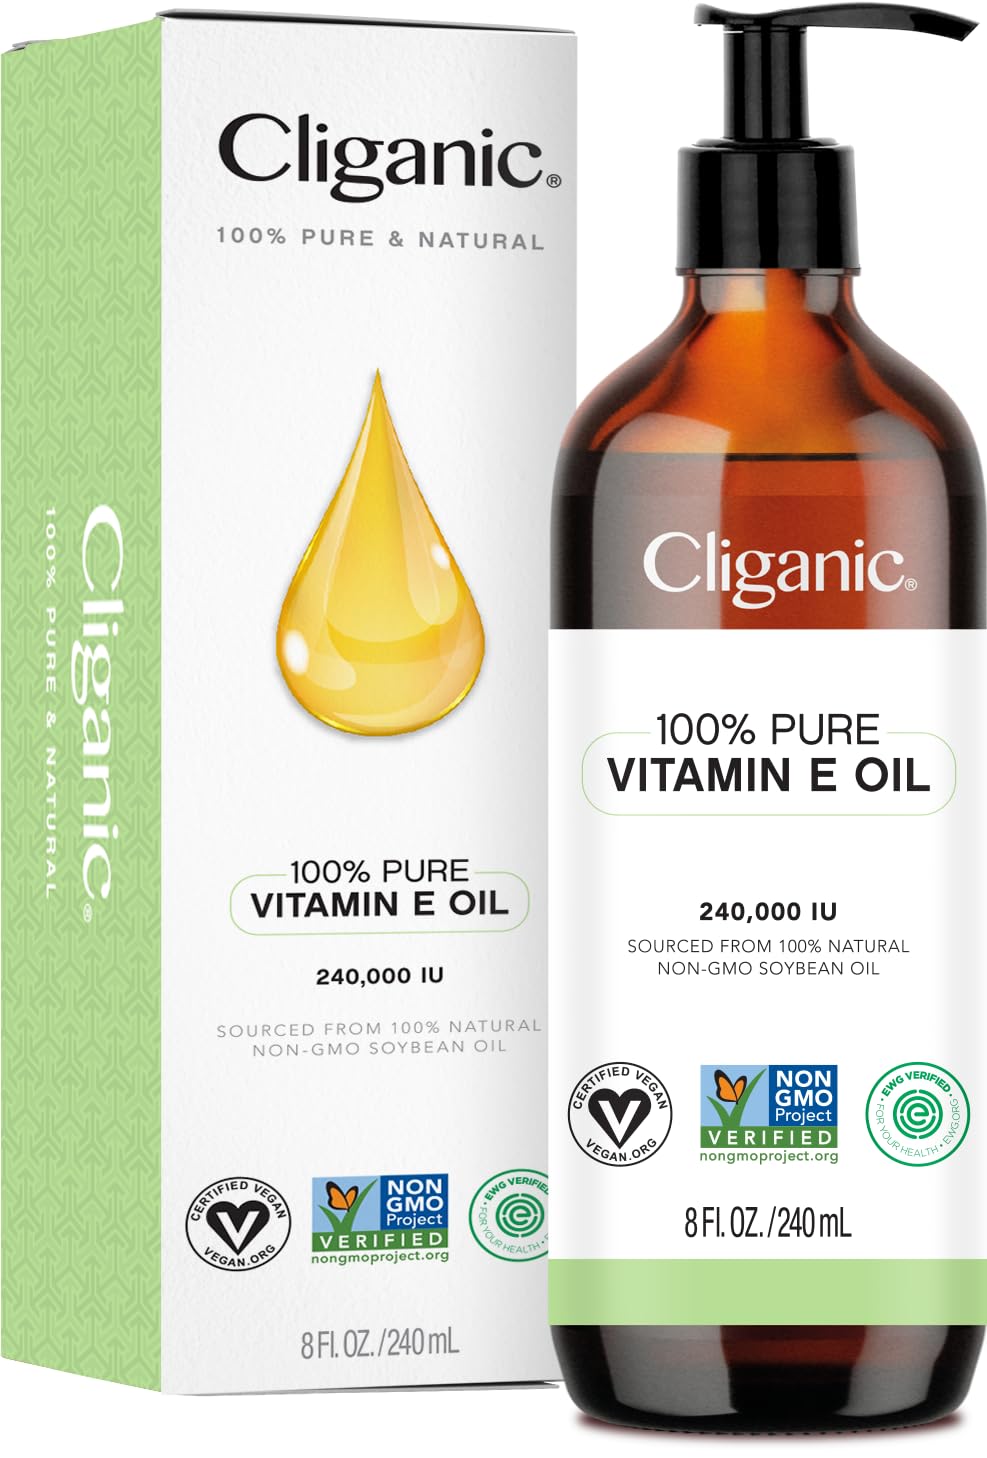 Cliganic 100% Pure Vitamin E Oil for Skin, Hair & Face 240,000 IU (8oz), Non-GMO Verified | Natural D-Alpha Tocopherol